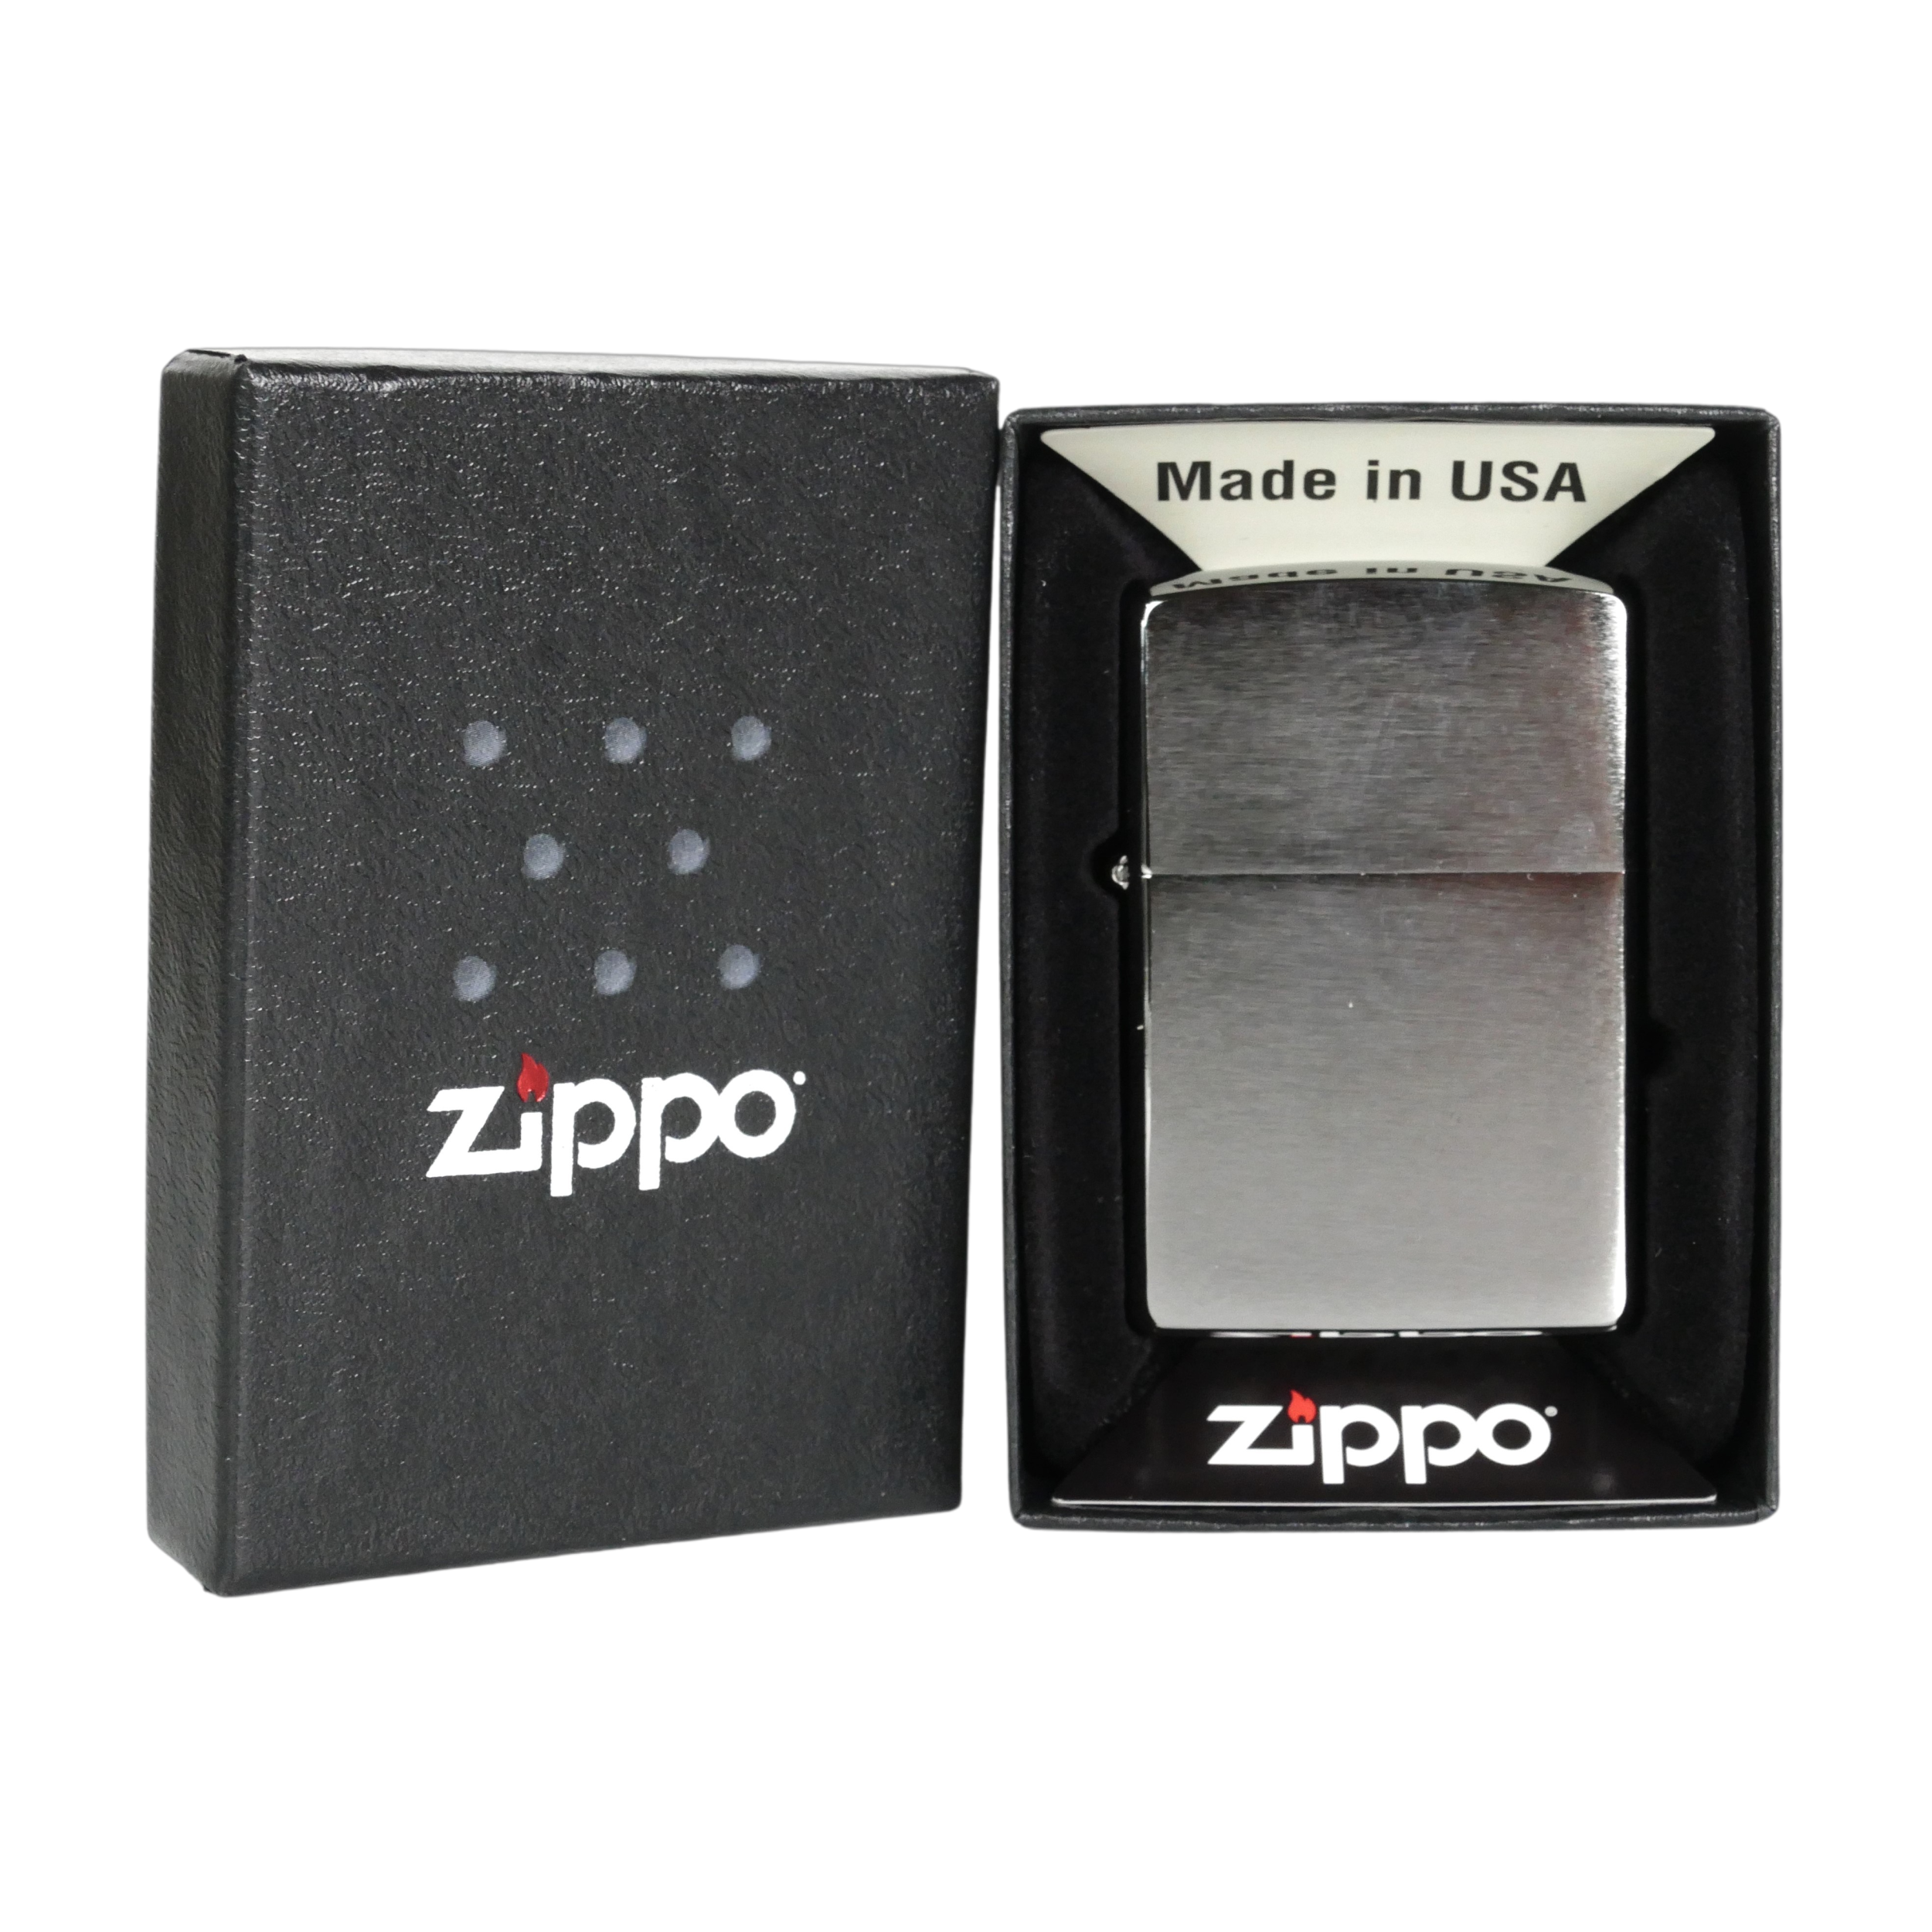 Zippo® Feuerzeug Personalisiert mit Wunschtext - Wiens3d